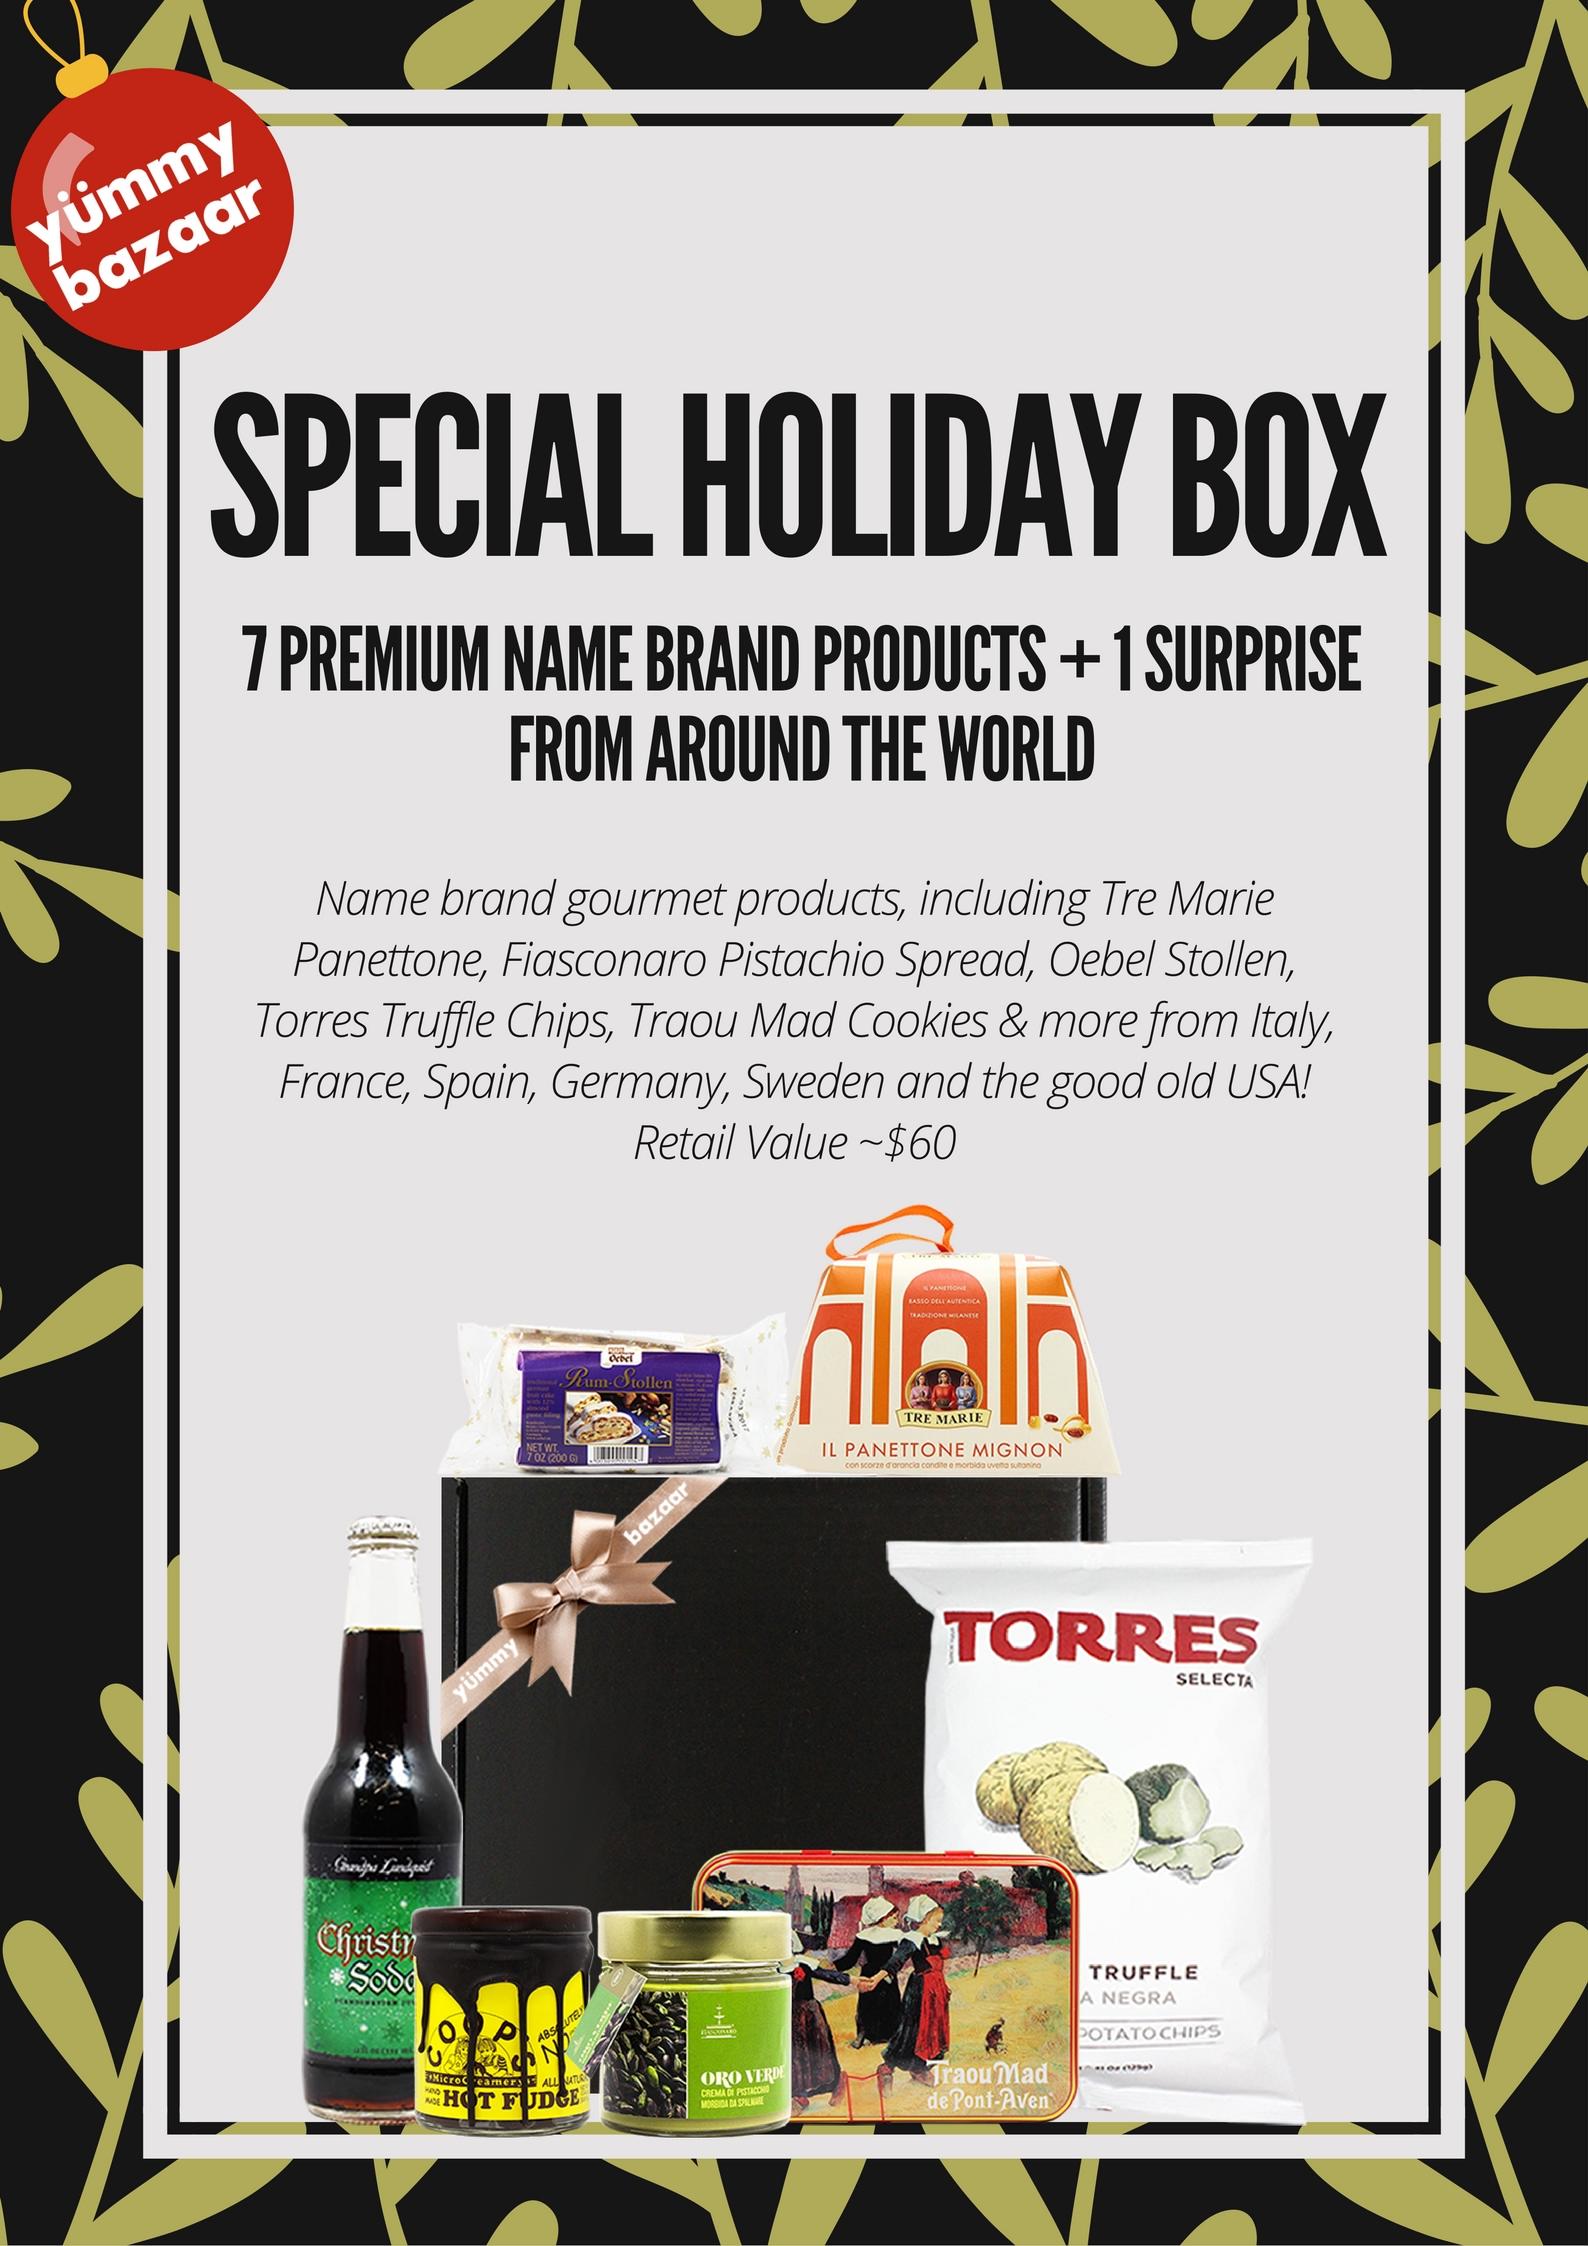 Yummy Bazaar Full Experience Box Spoilers – December 2016